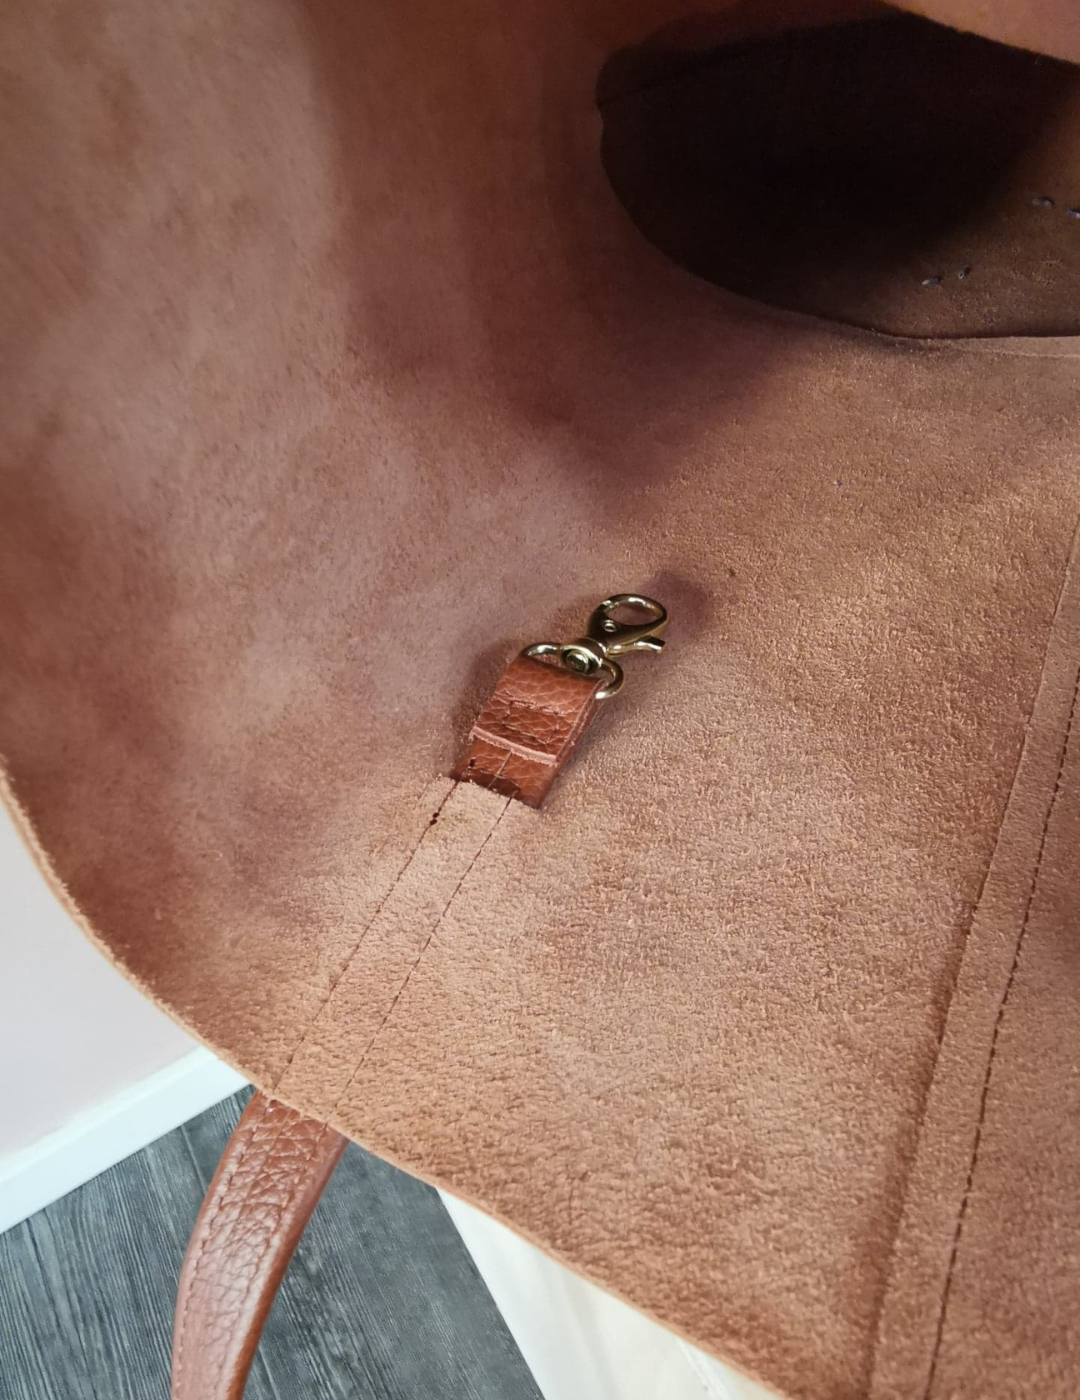 Simply Fab bag, ruskea nahka